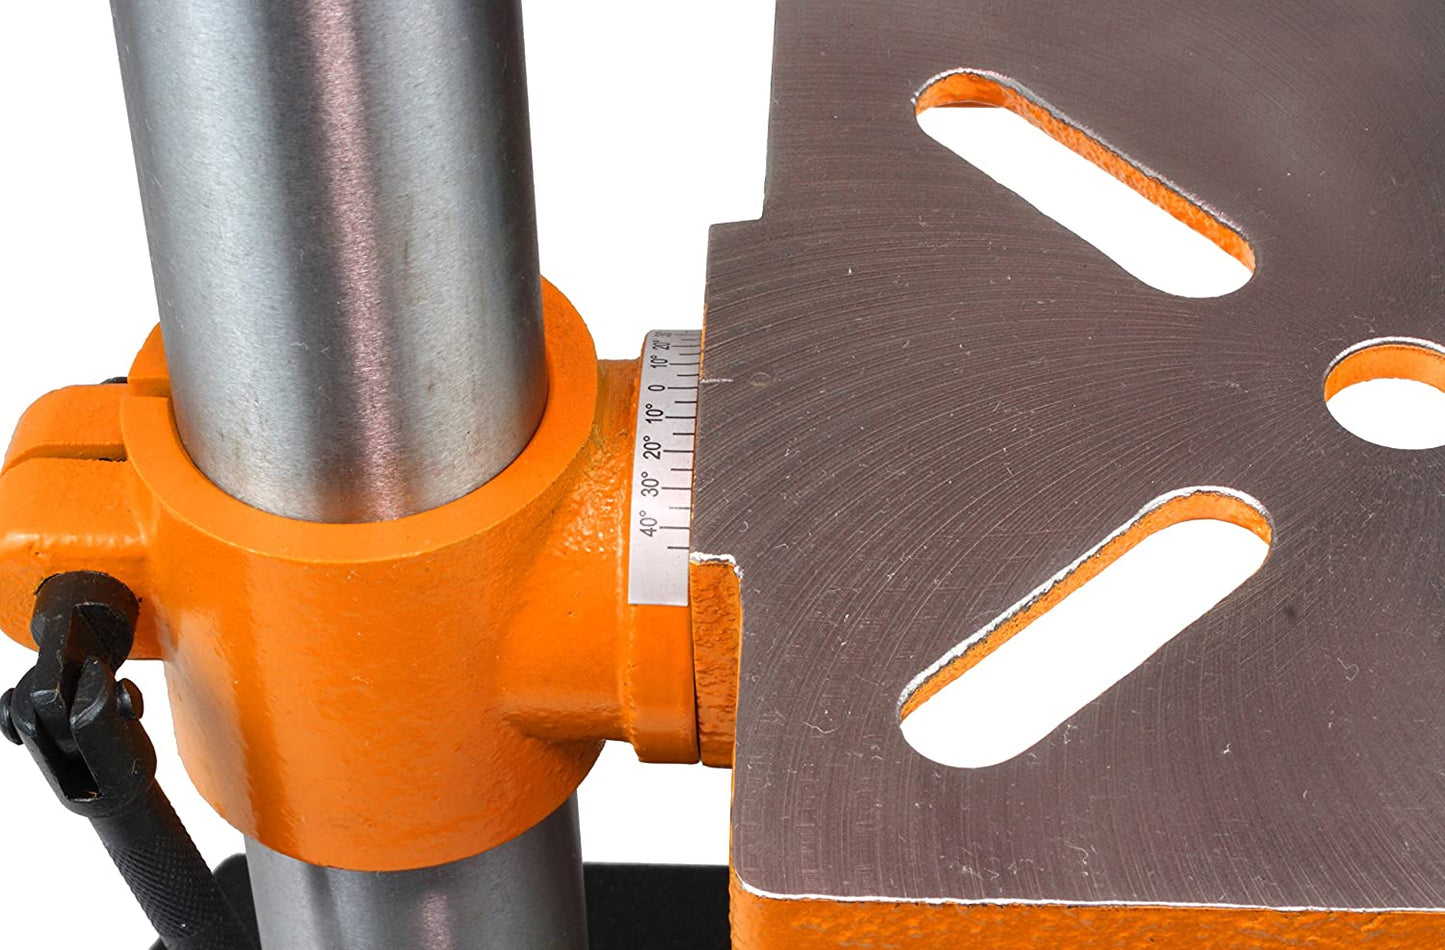 Black/Orange 4208T 2.3-Amp 8-Inch 5-Speed Cast Iron Benchtop Drill Press